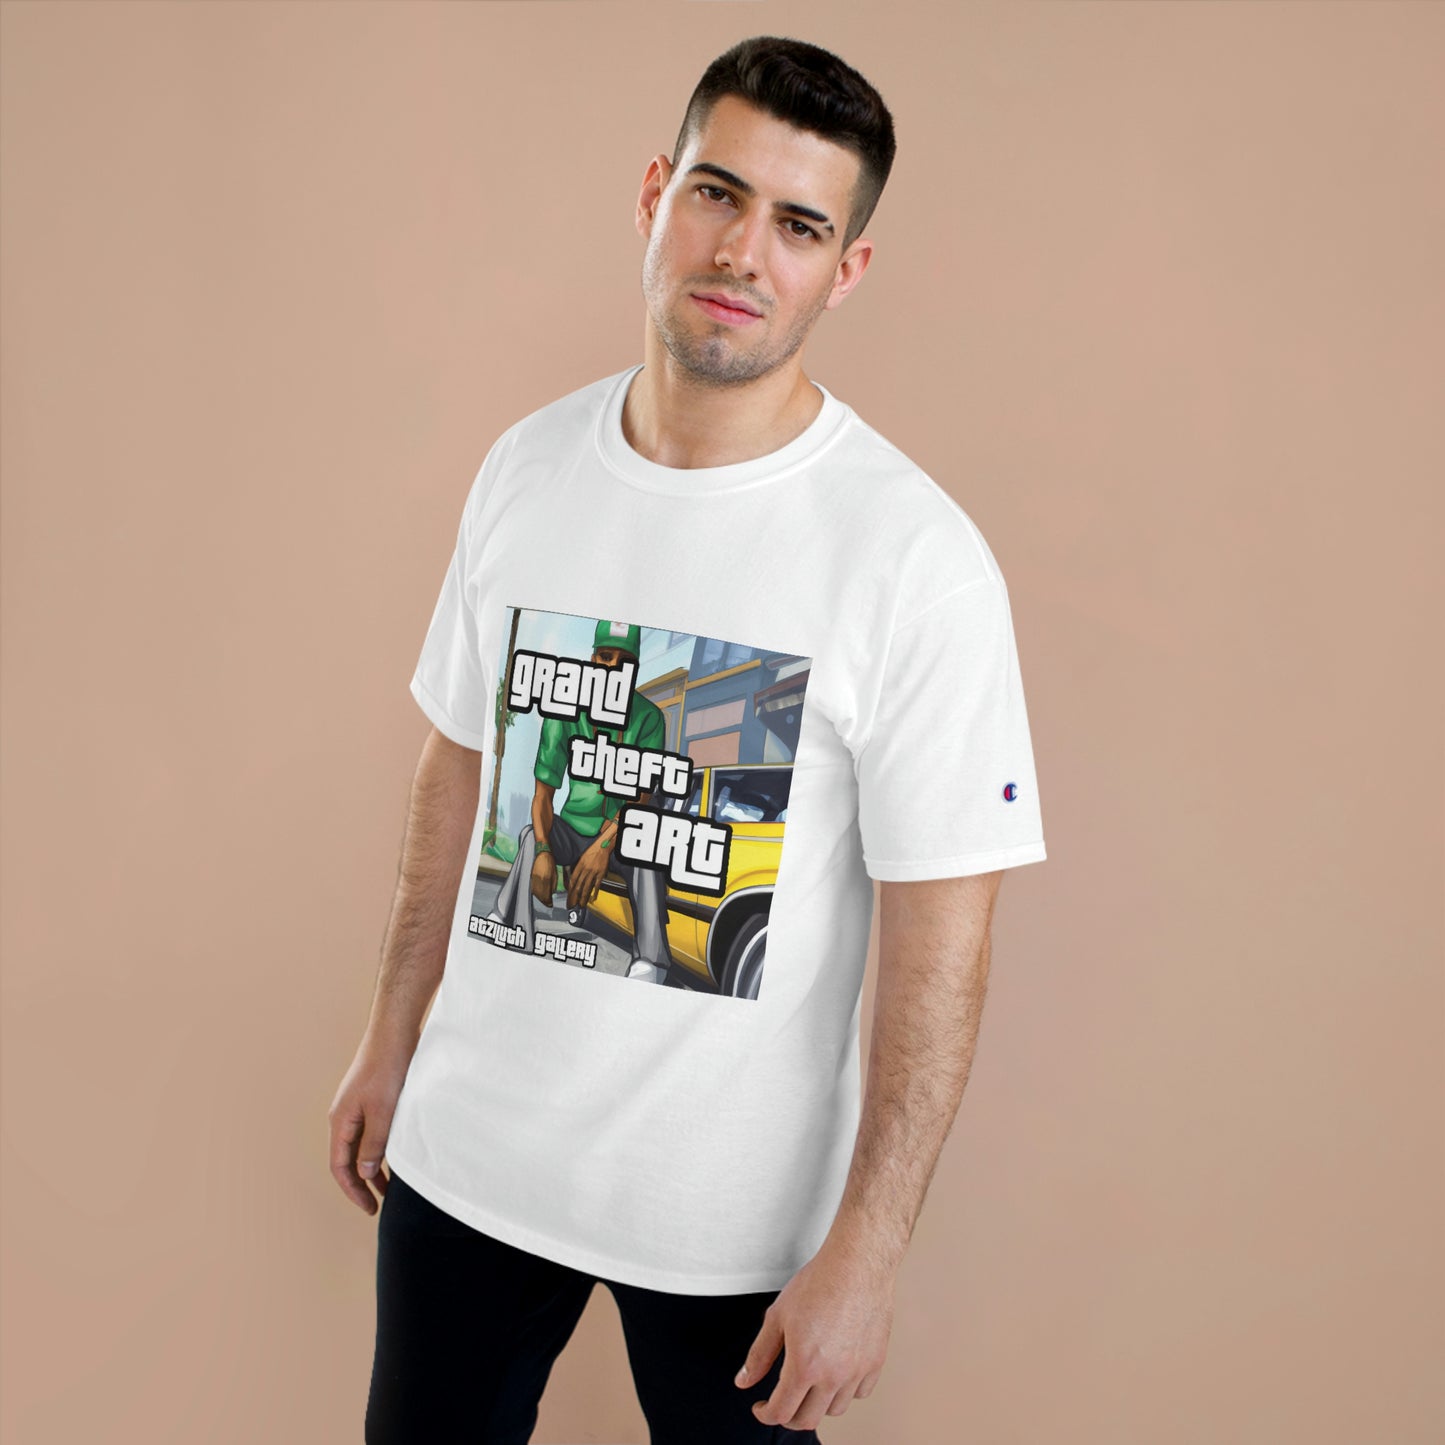 Atziluth Gallery x Champion "Grand Theft Art" T-Shirt